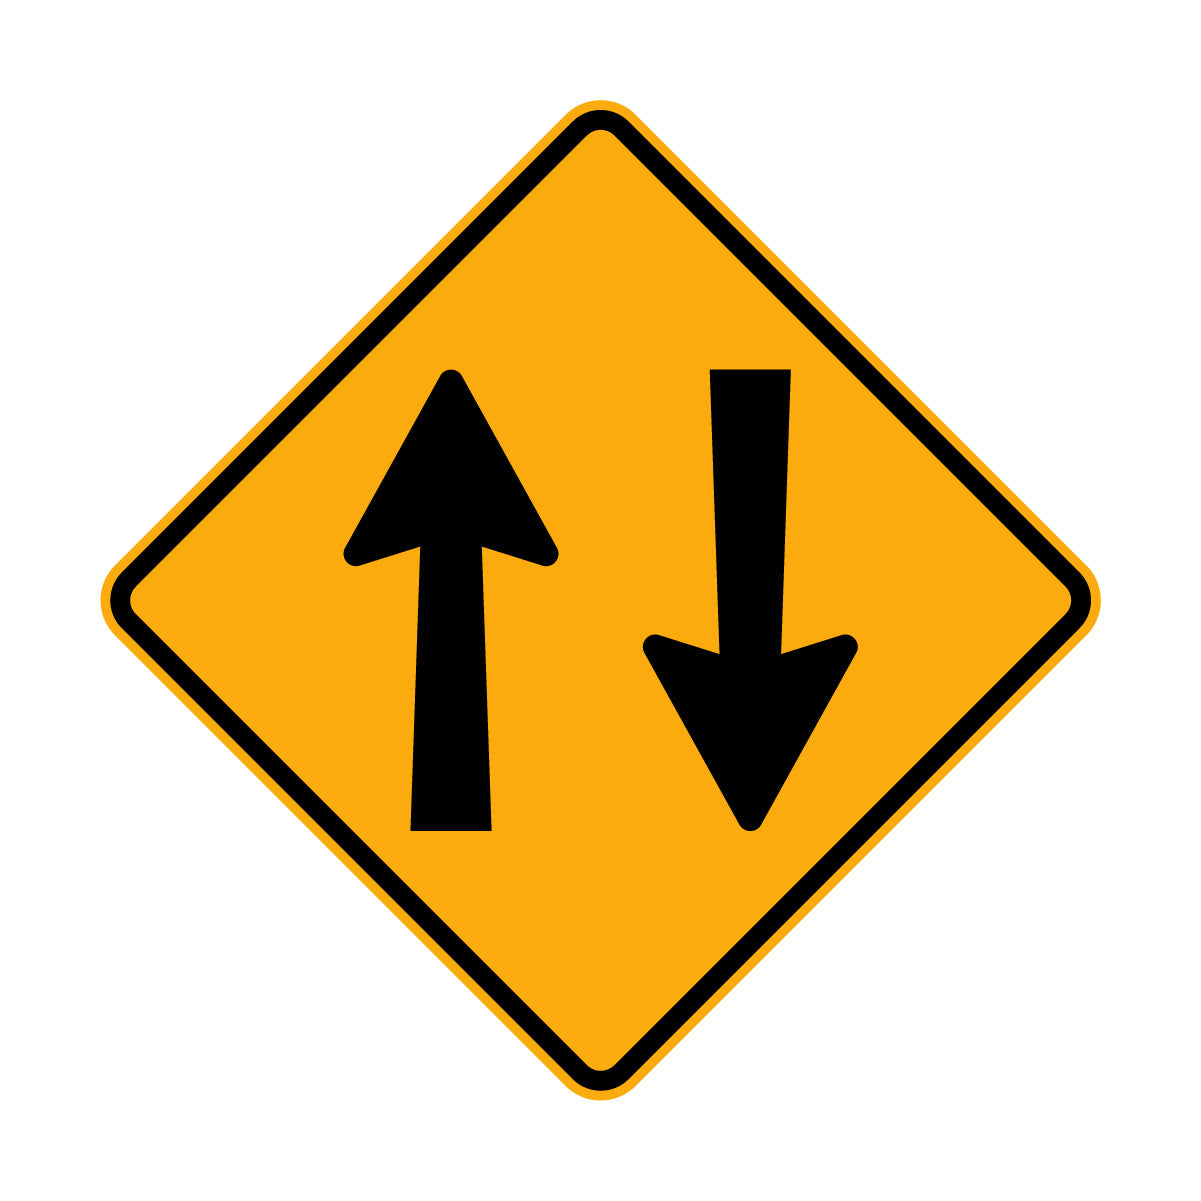 Warning: Two Way Road Sign